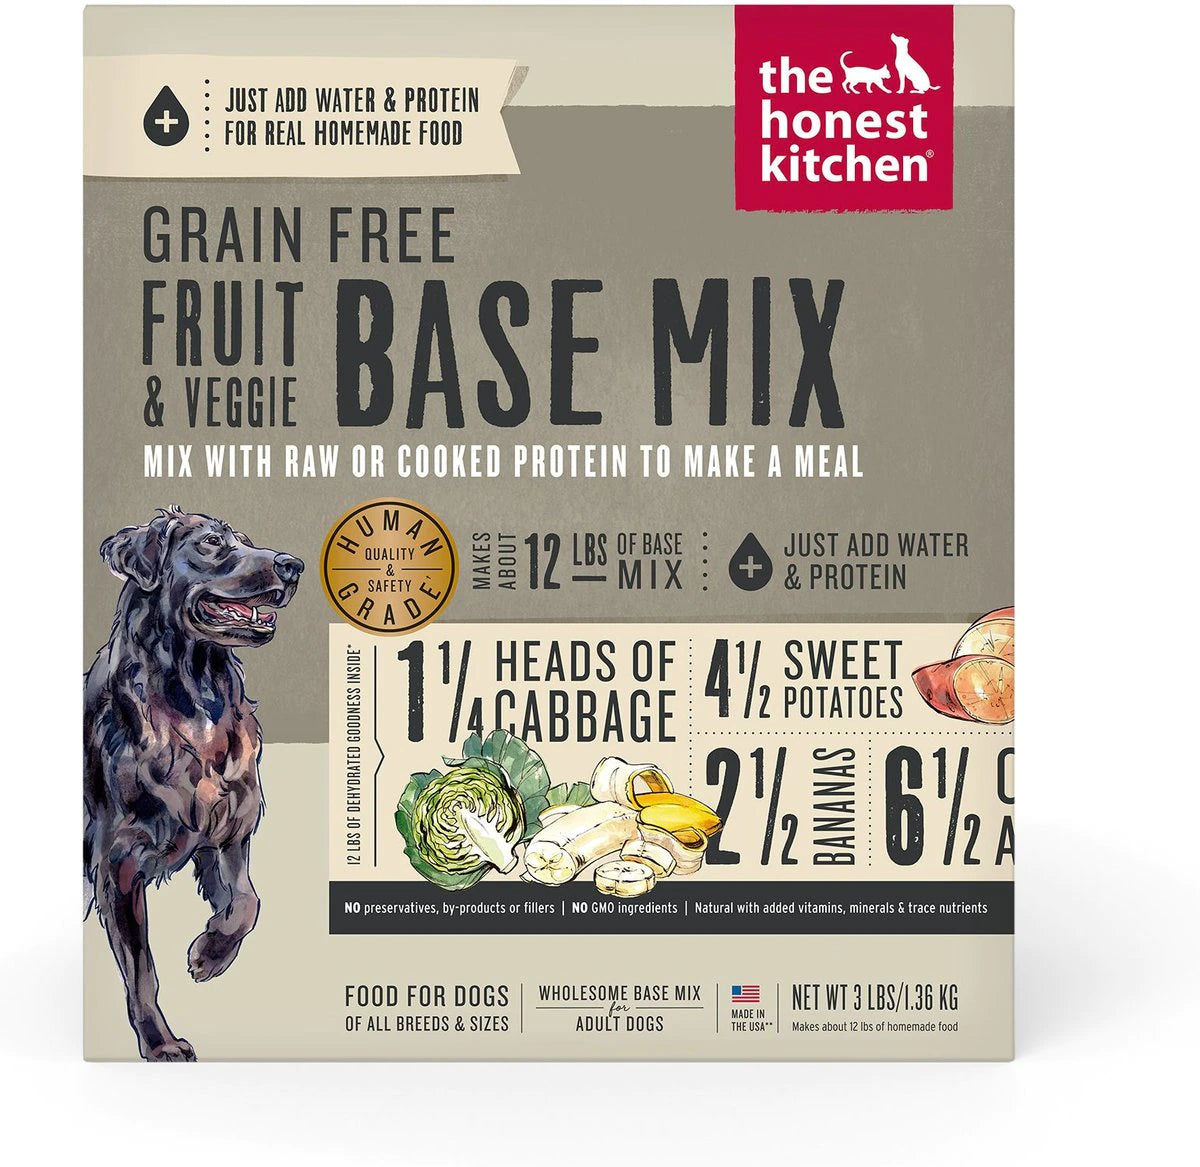 The Honest Kitchen Grain Free Fruit & Veggie Base Mix Adult Dehydrated Dog Food